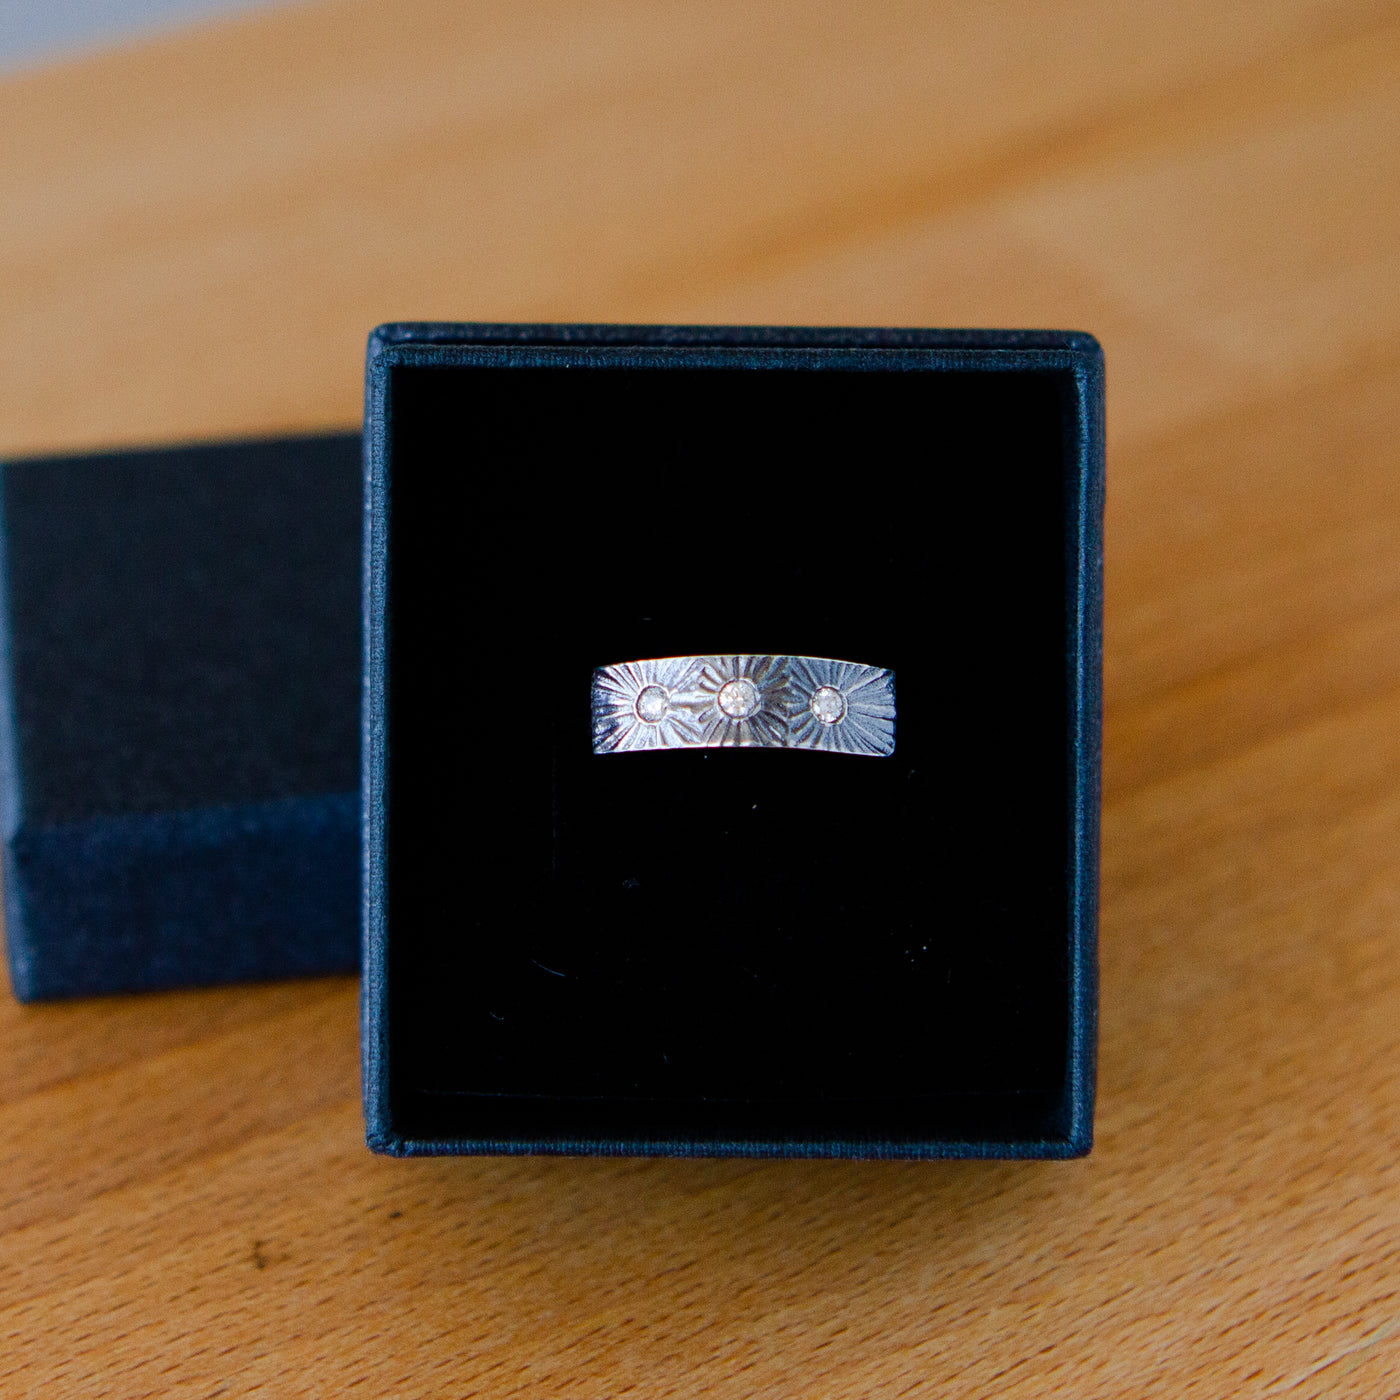 Nova Oxidized Silver and Diamond Ring by Corey Egan in a ring box